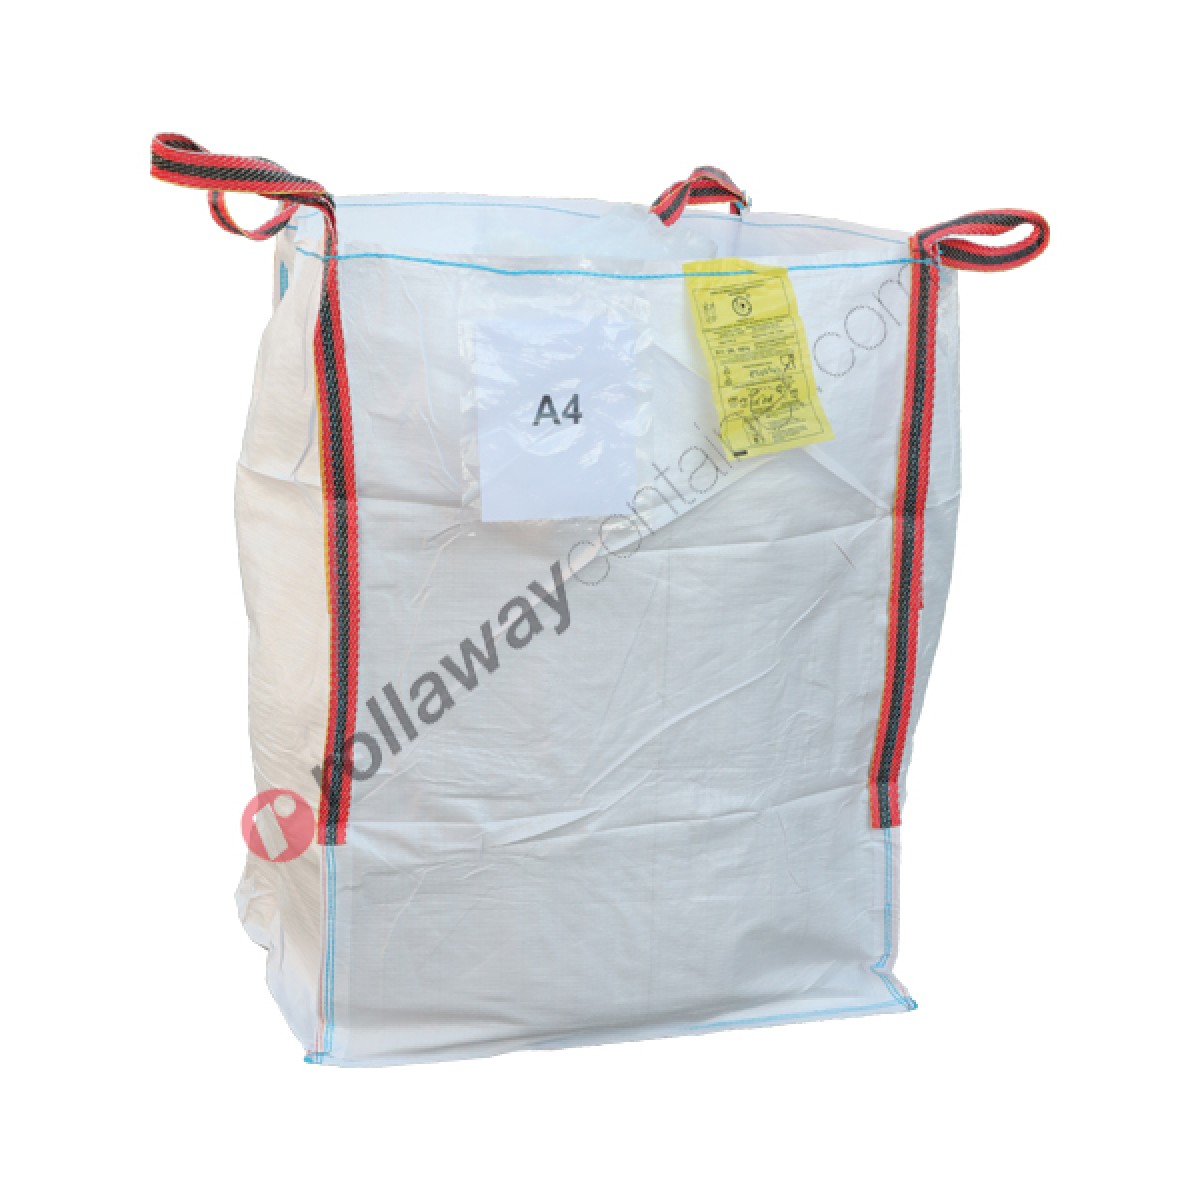 75 x 96 cm Bags BIGBAGS Säcke CONTAINER #21 ☀️ ☀️ 10 Stück BIG BAG 95 cm hoch 